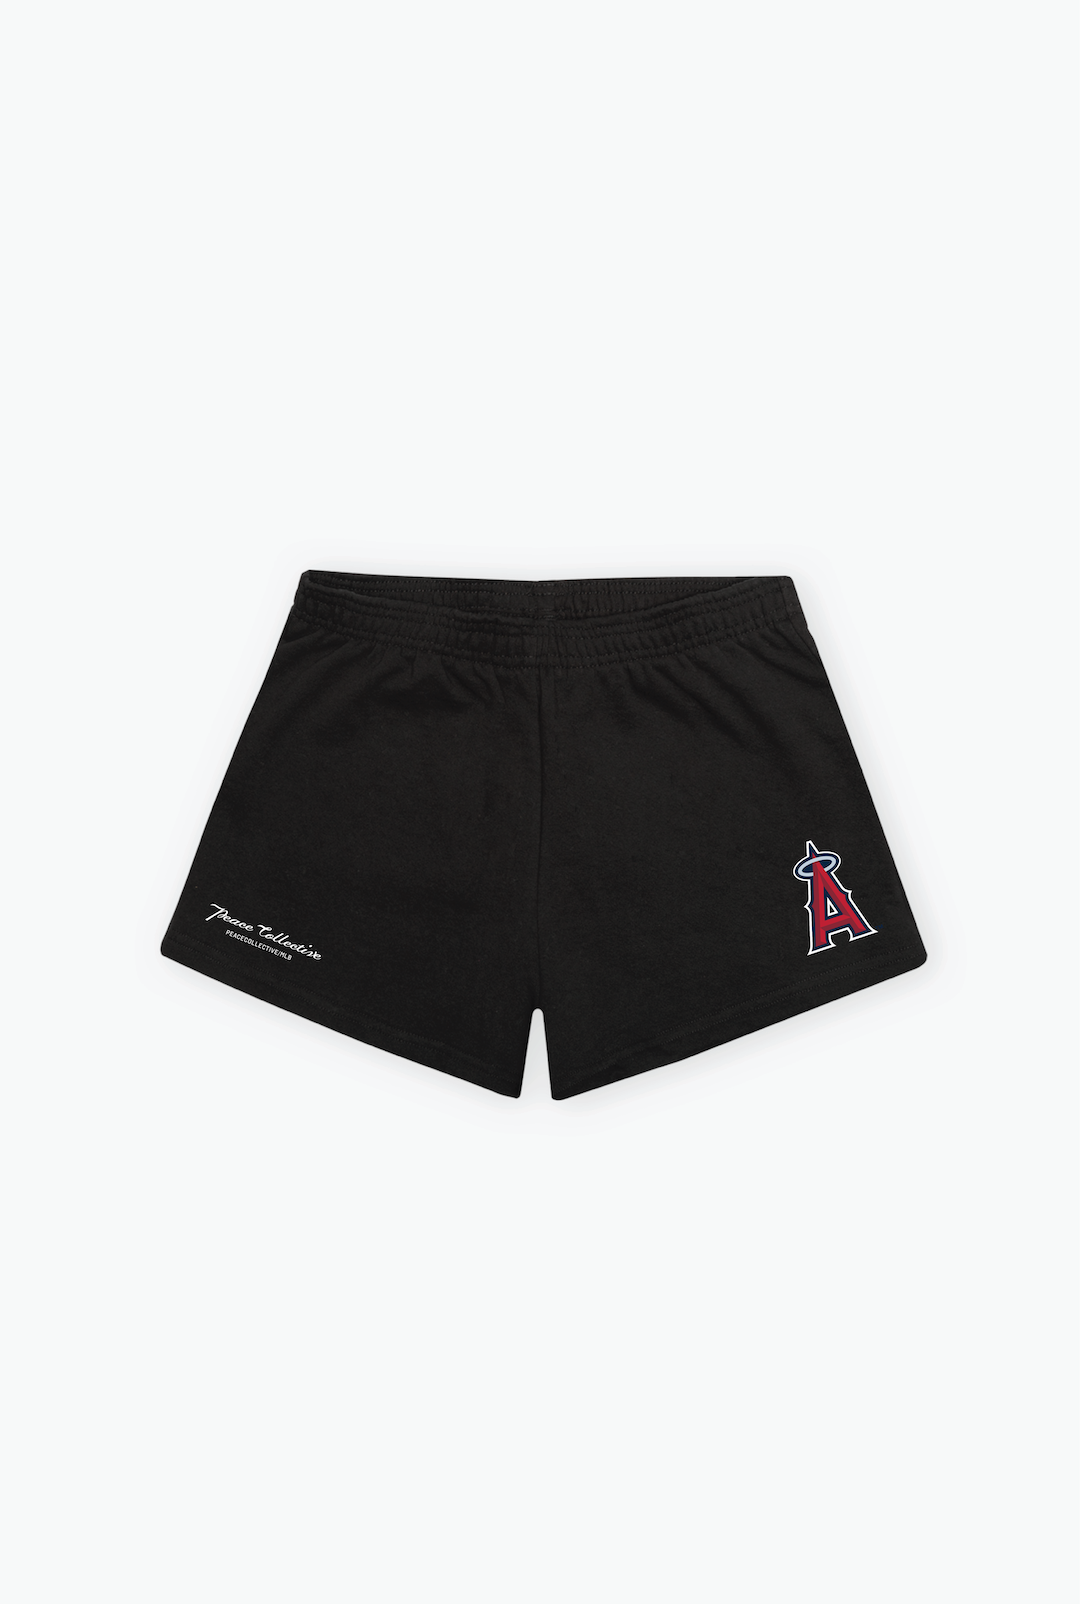 Los Angeles Angels Women's Fleece Shorts - Black